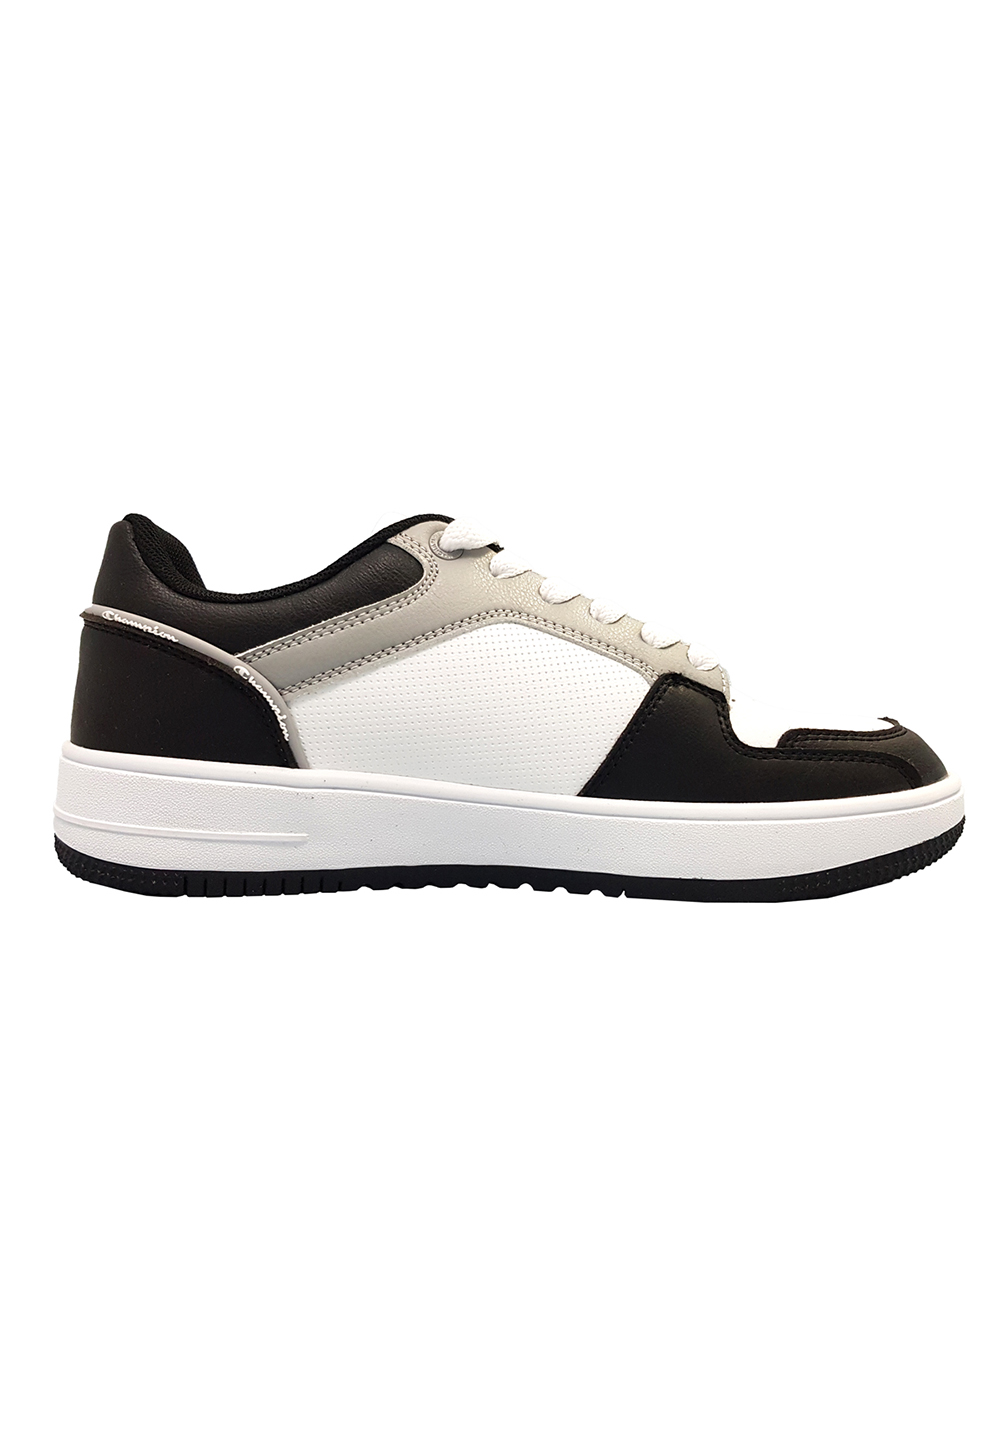 Champion Herren Sneakers Rebound 2.0 Low S21906 schwarz weiß